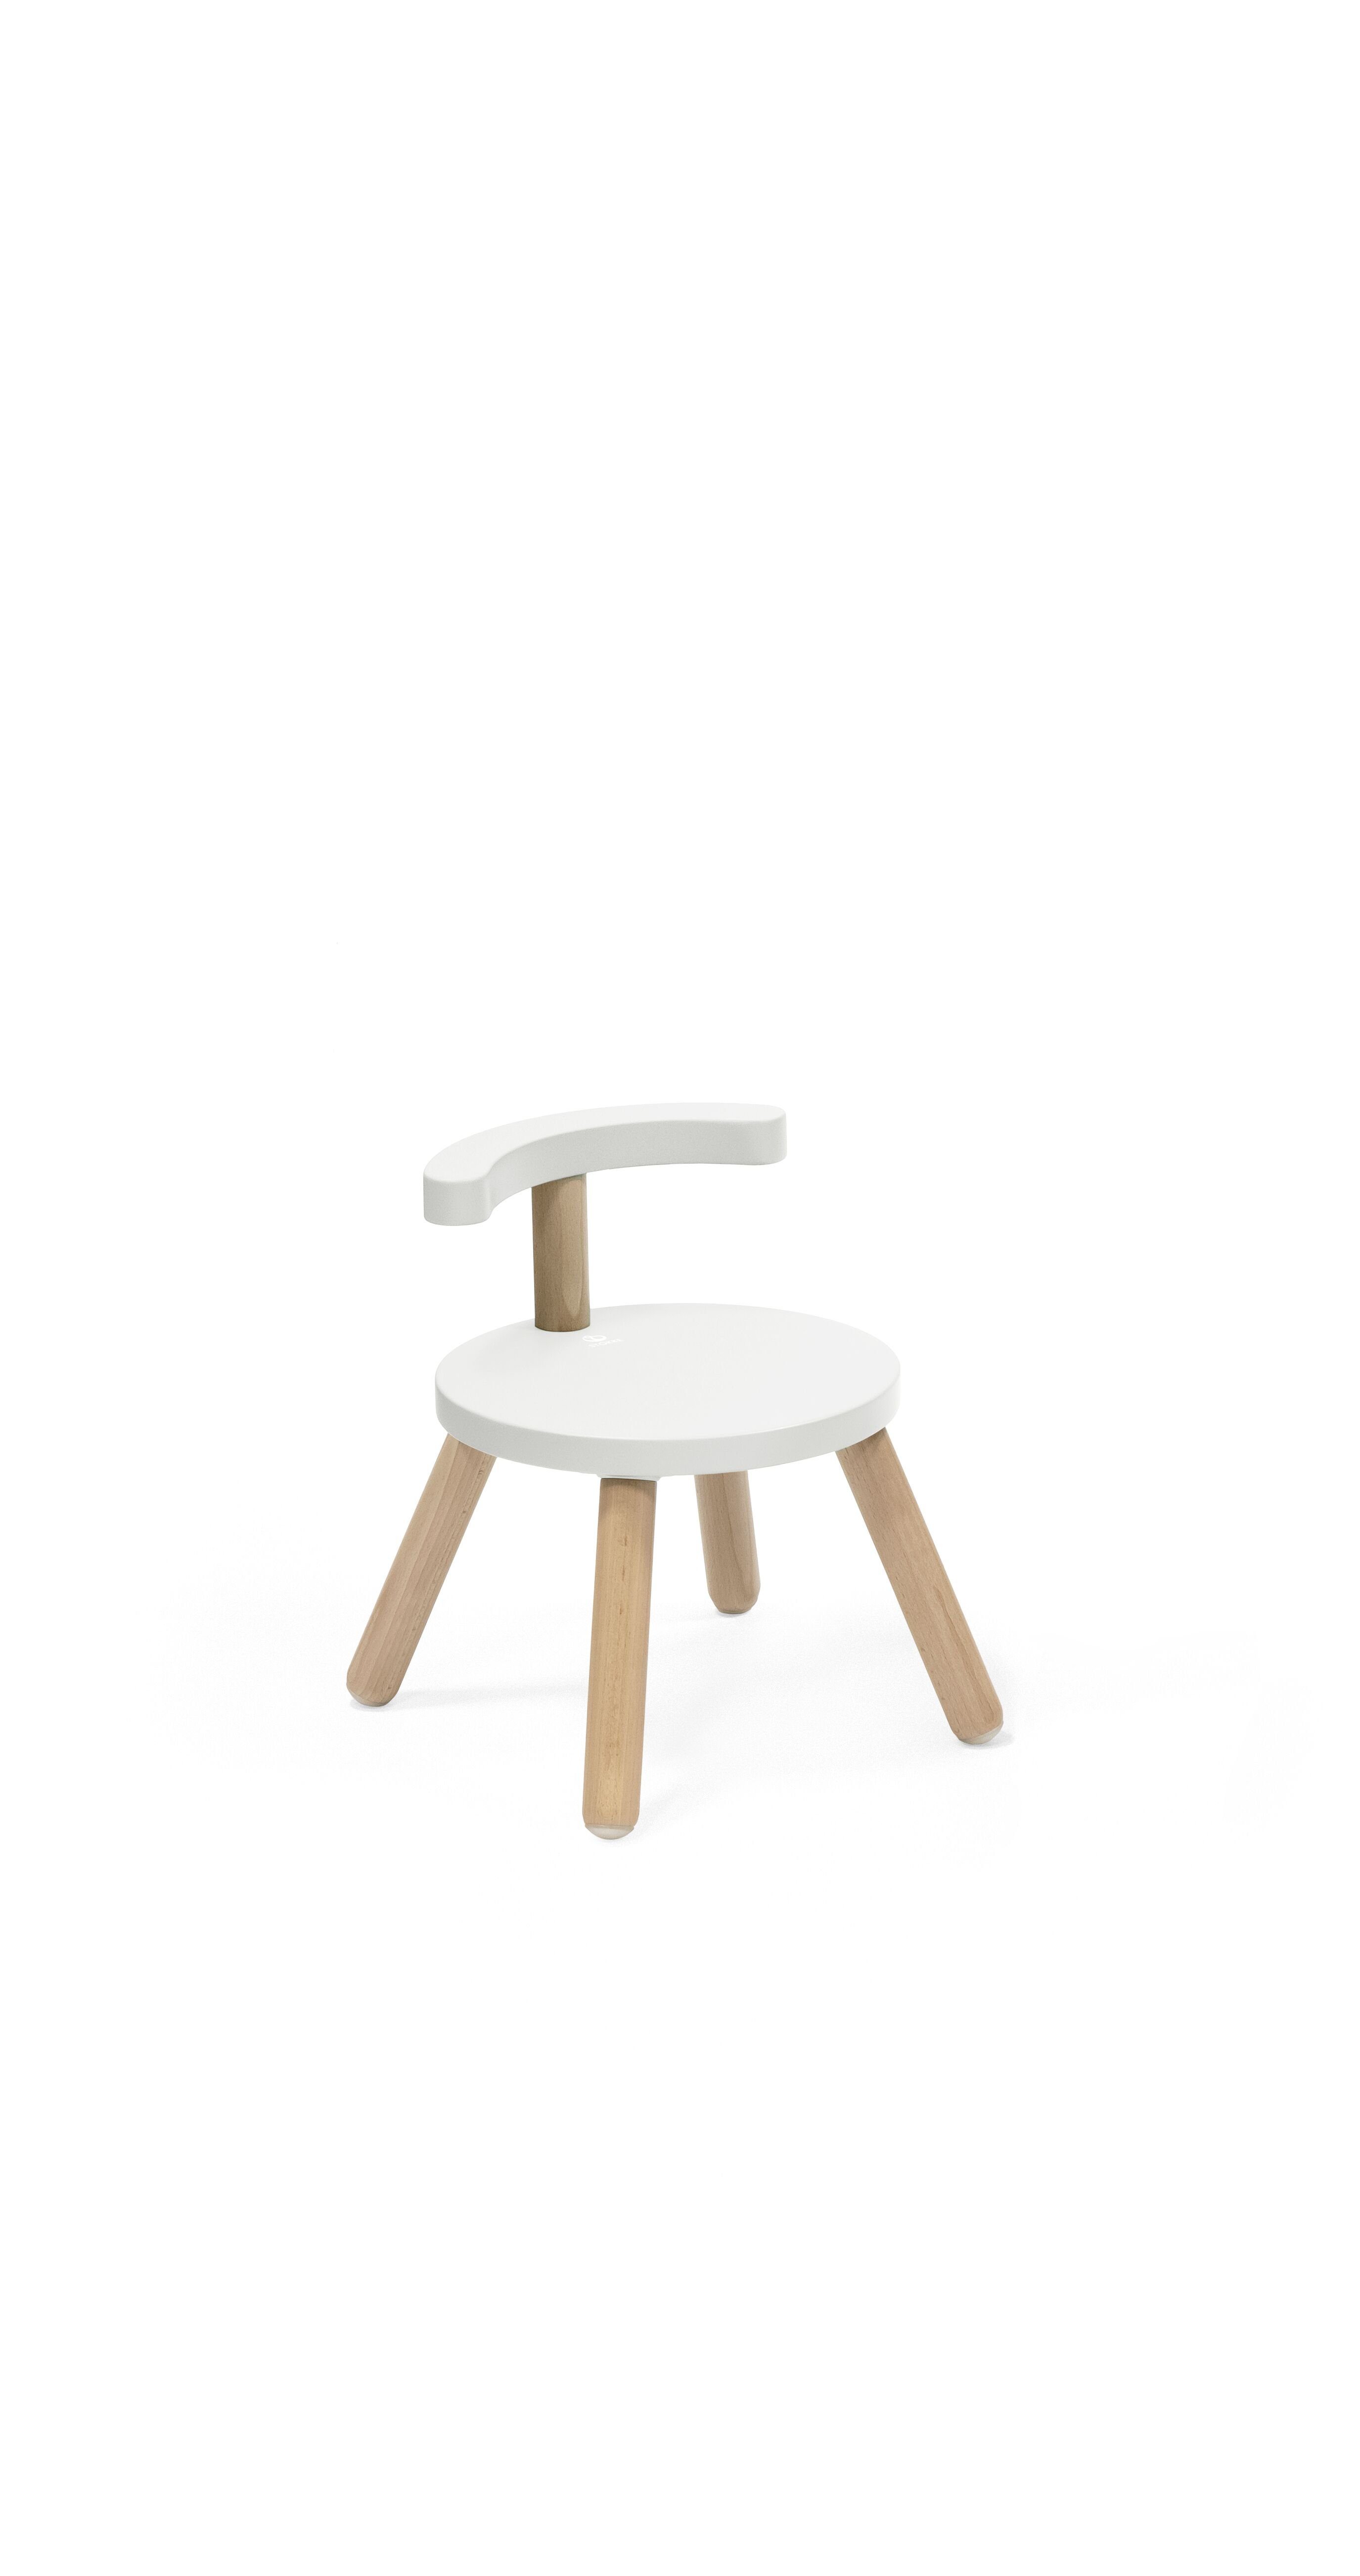 Kindersitzgruppe MuTable™ Kinderstuhl Sitzhöhe, Stokke® V2, Stokke flexibler dem Spieltisch kompatibel​ Mit White MuTable™ Stuhl mit